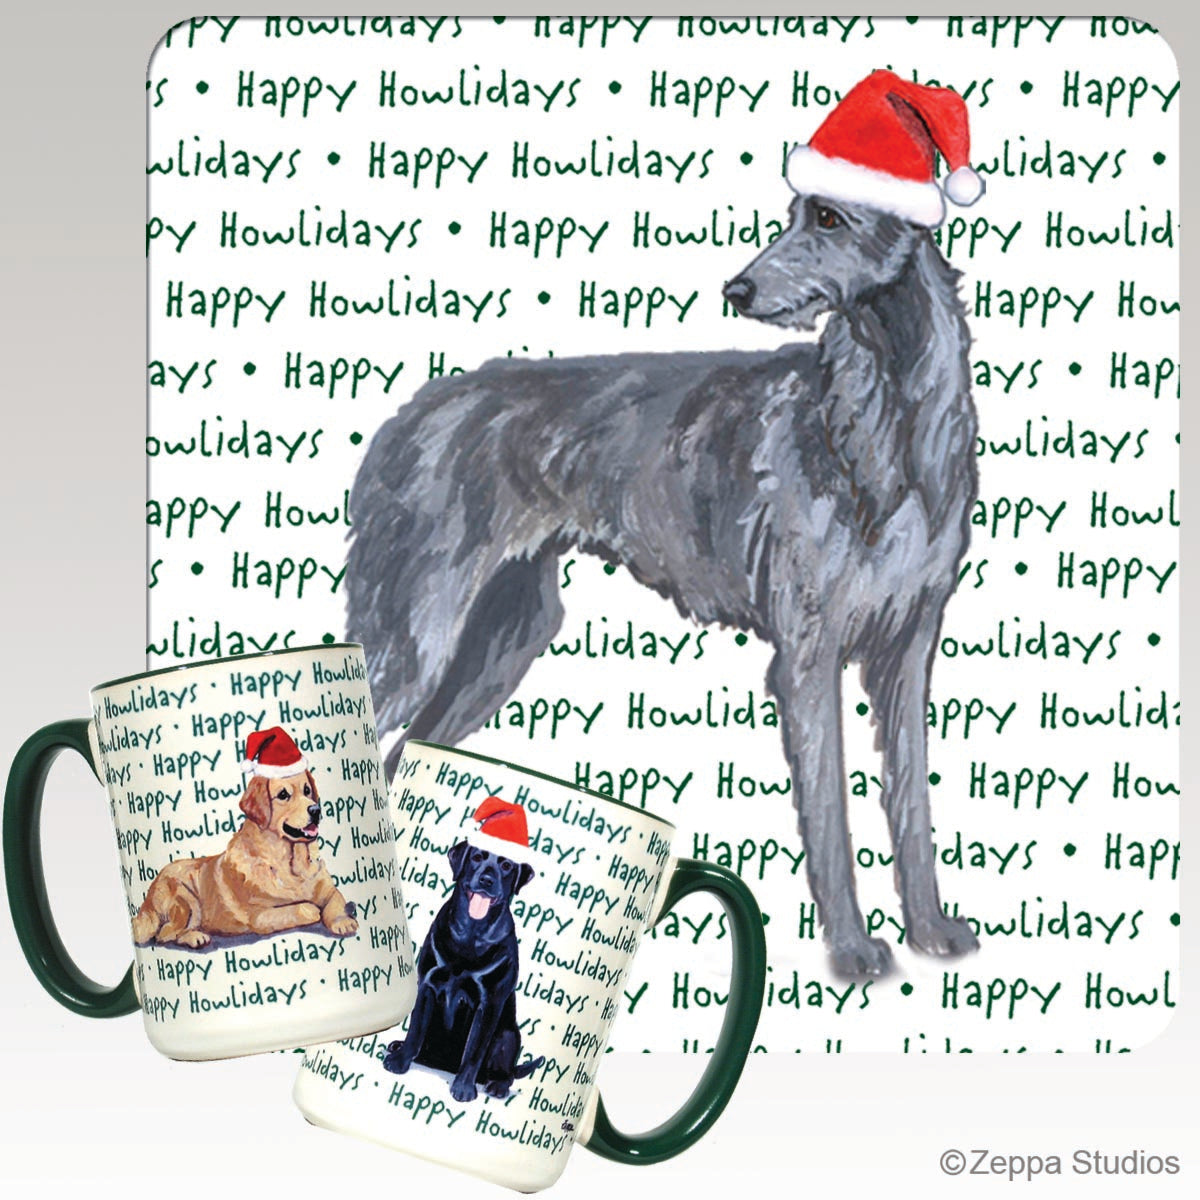 Scottish Deerhound Christmas Mugs